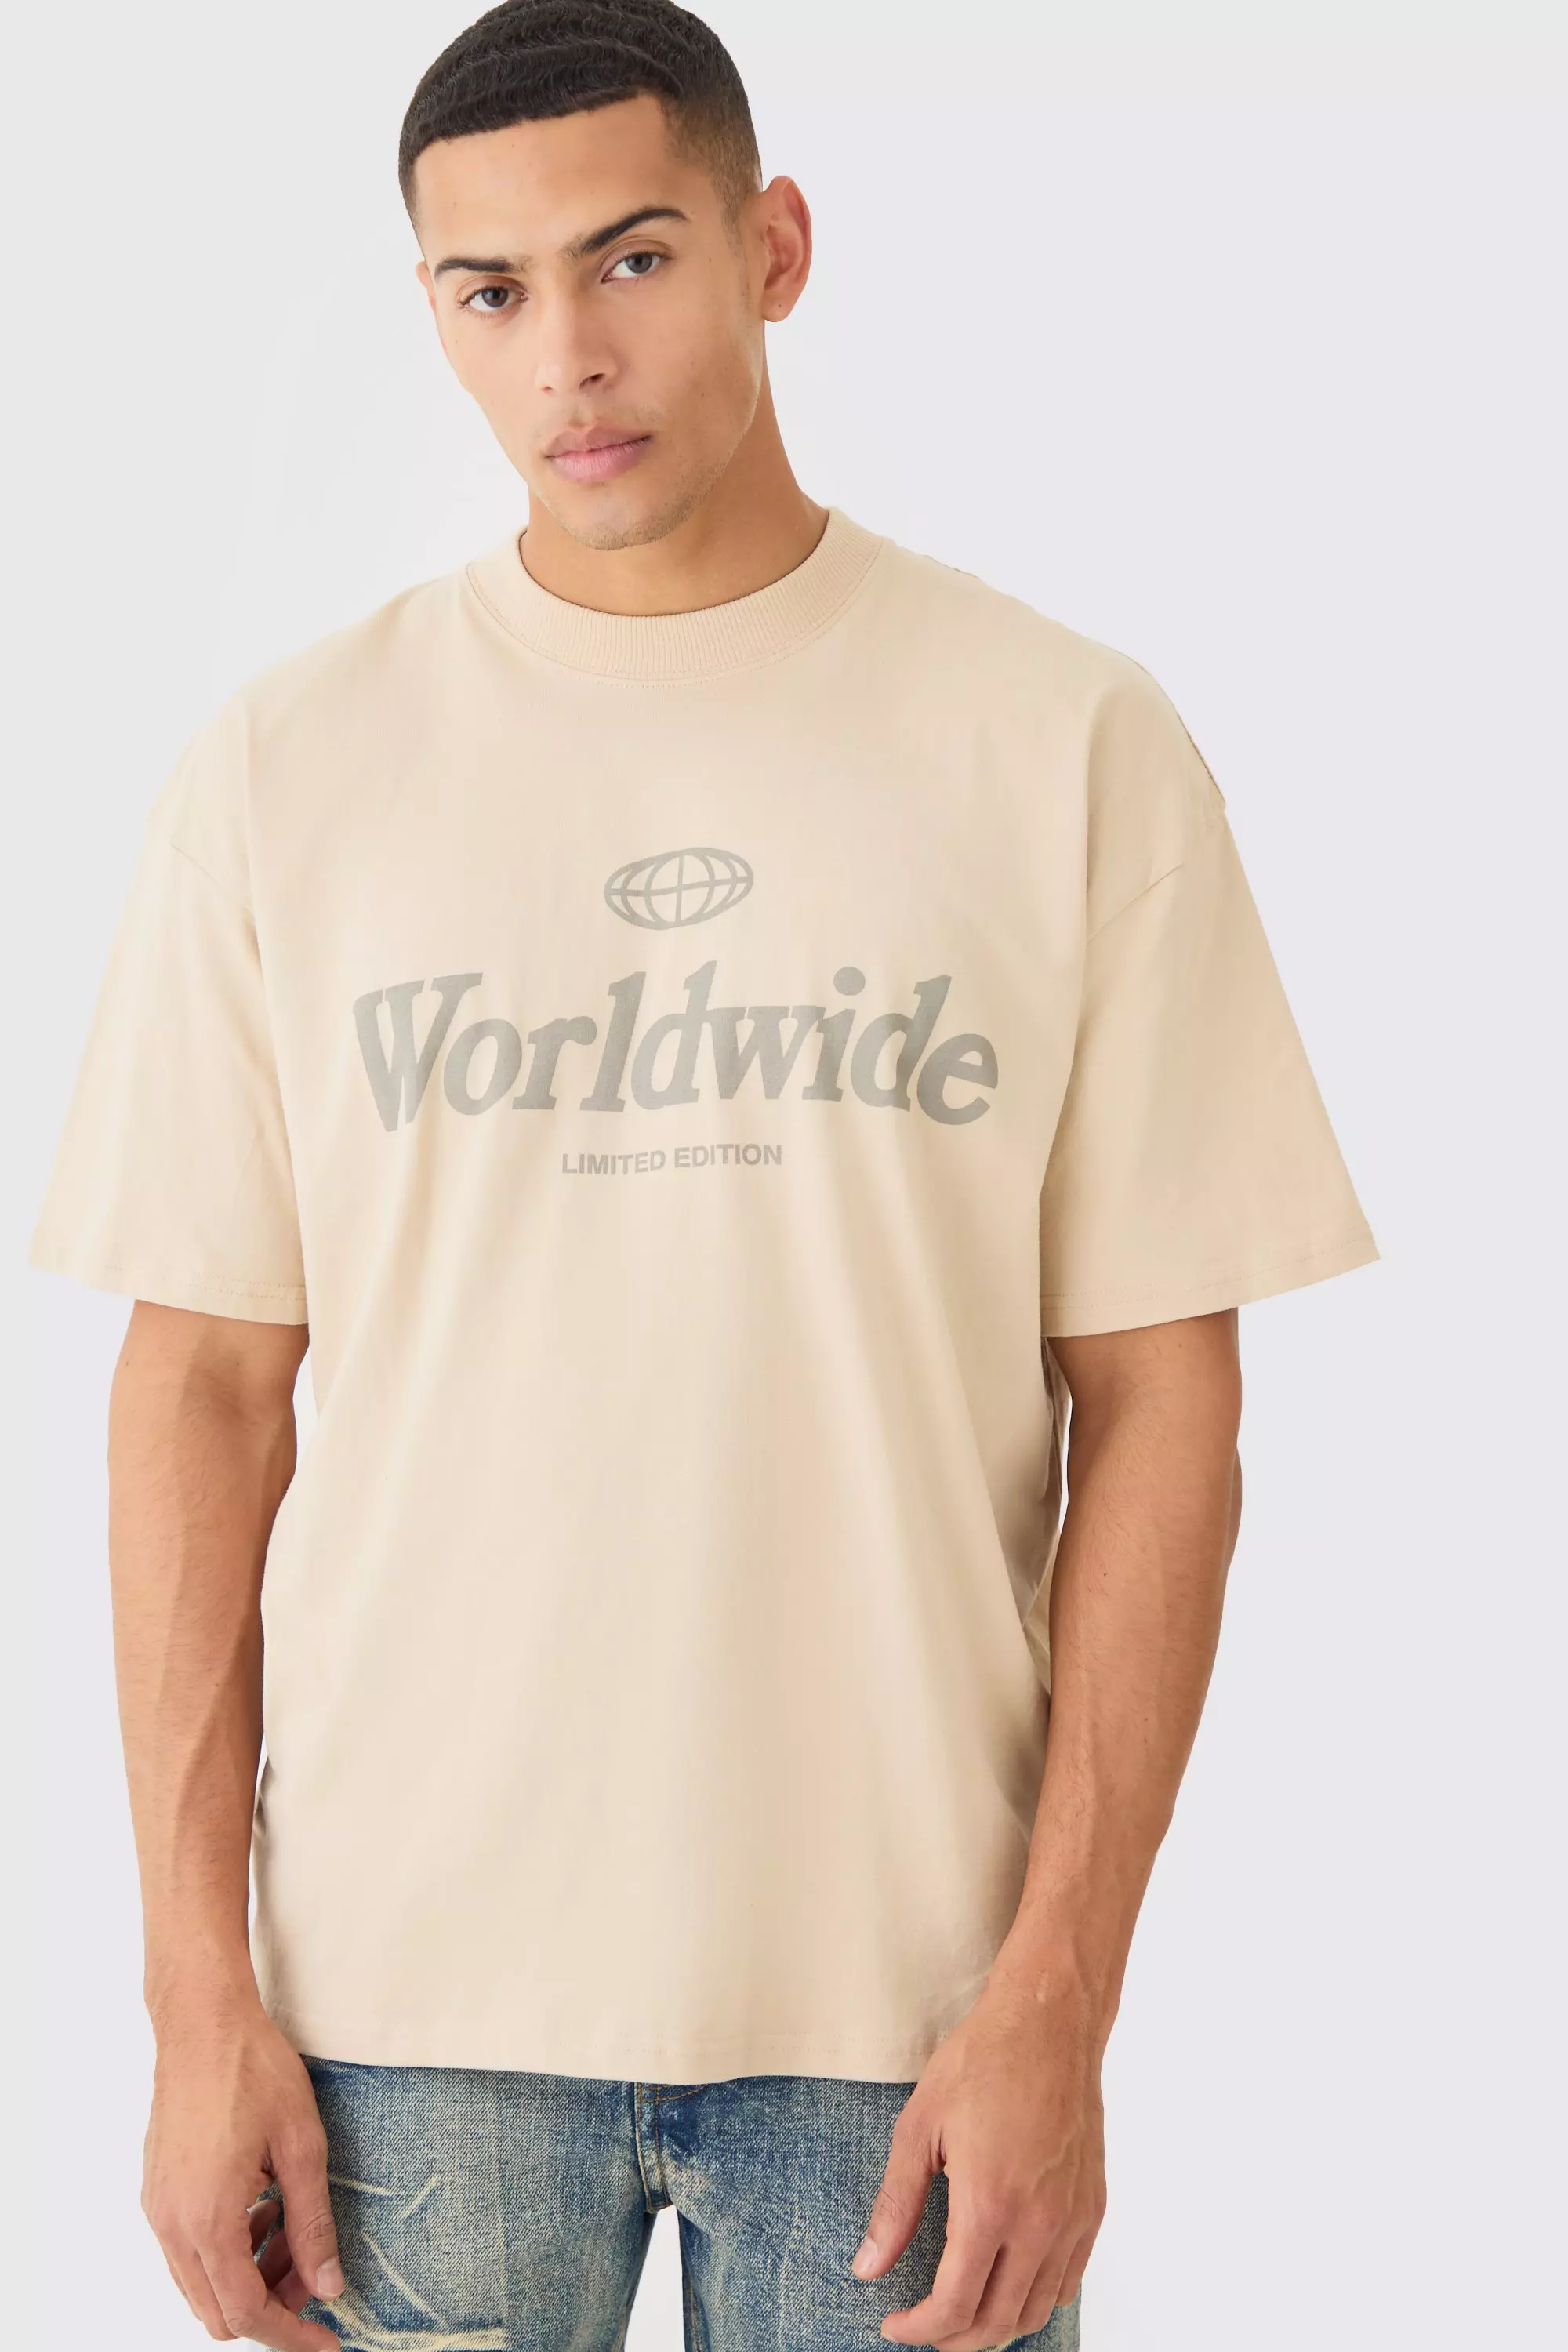 Oversized Worldwide T-shirt Sand